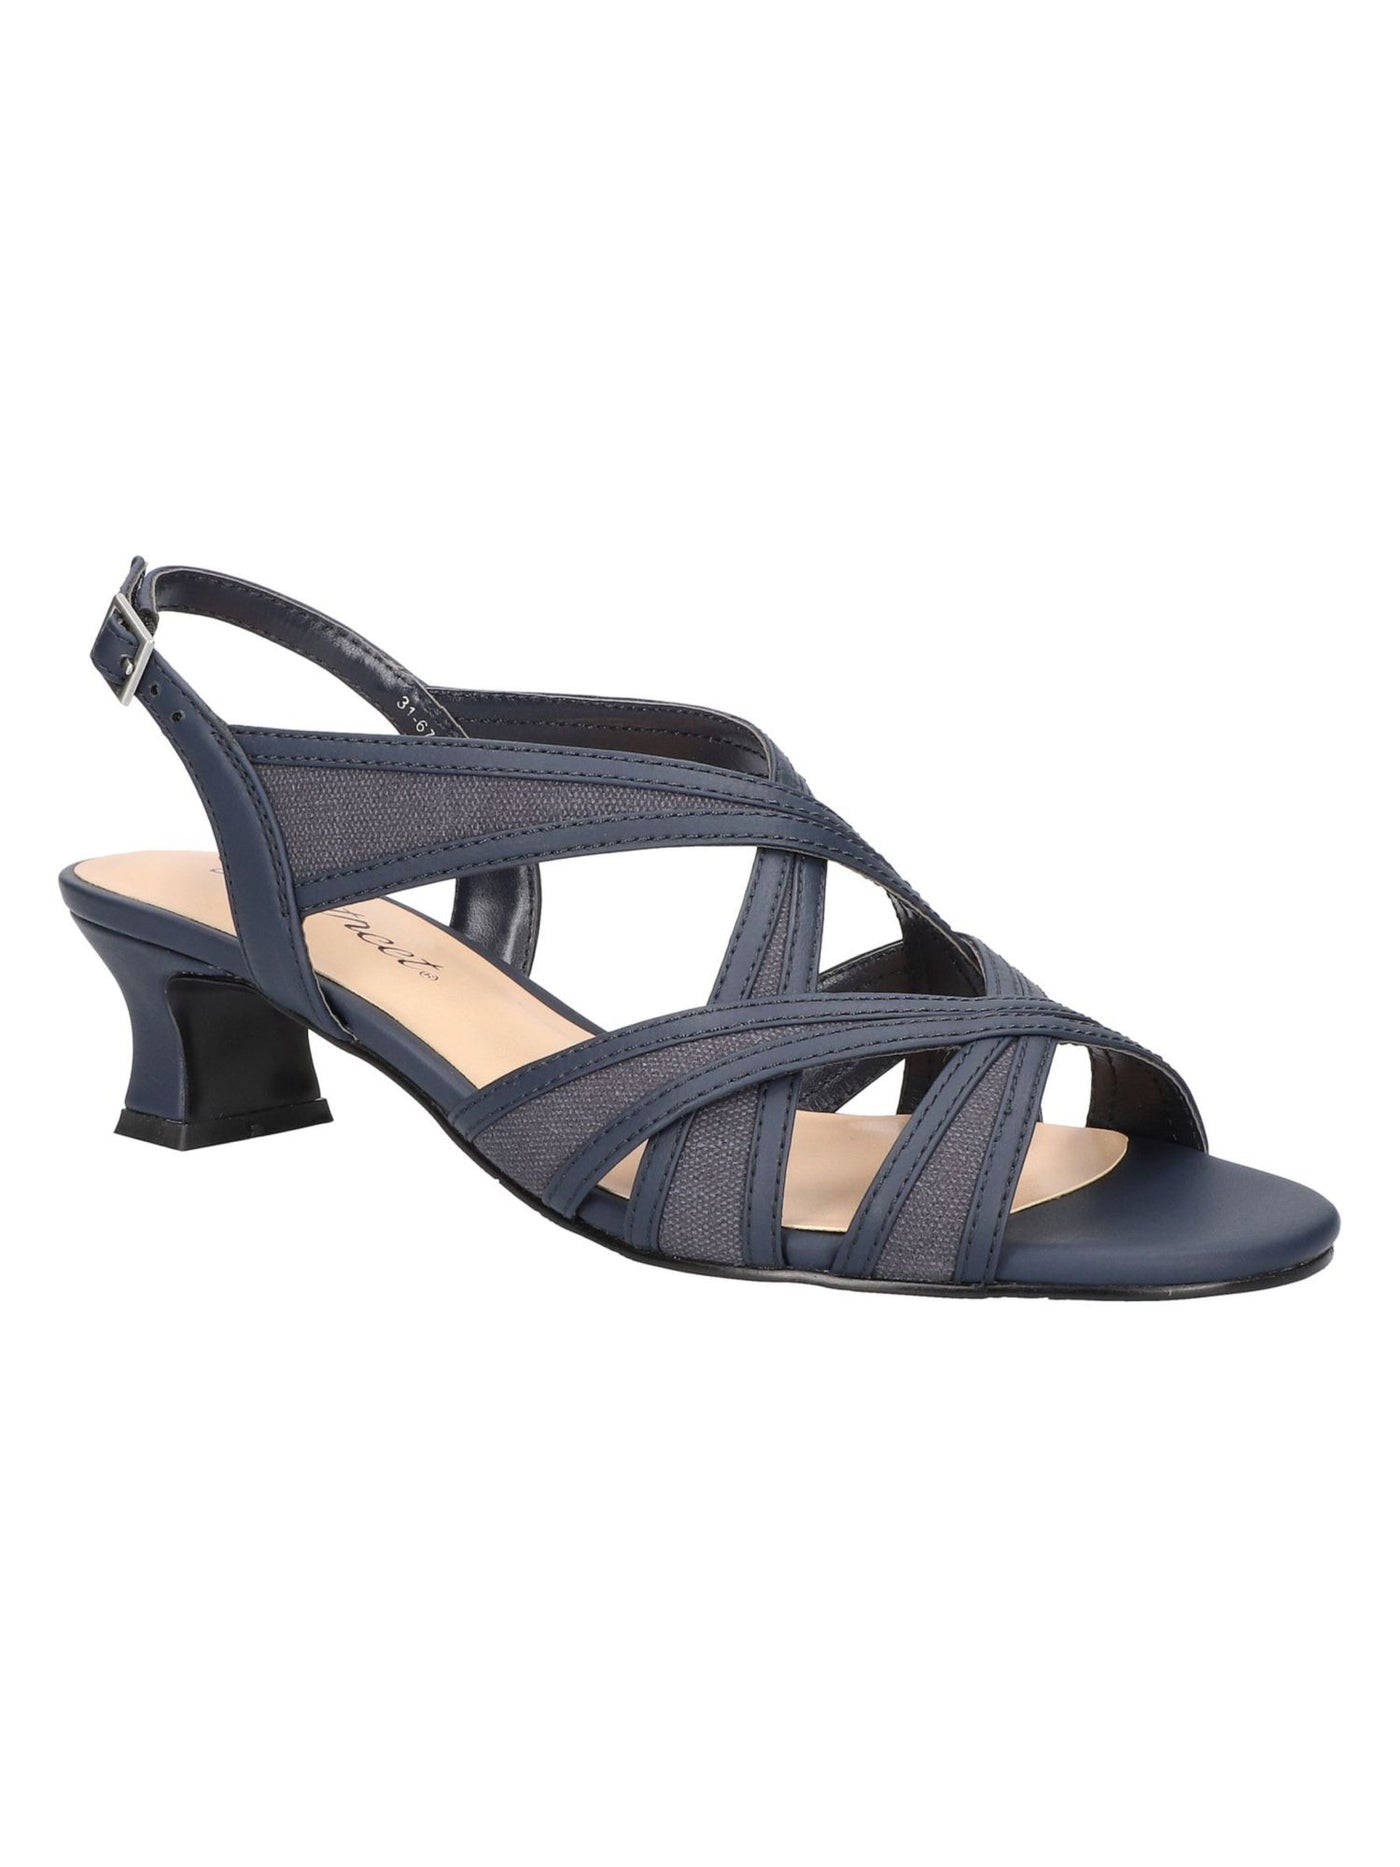 EASY STREET ALIVE AT 5 Womens Black Adjustable Tristen Open Toe Kitten Heel Buckle Dress Sandals Shoes 8.5 M